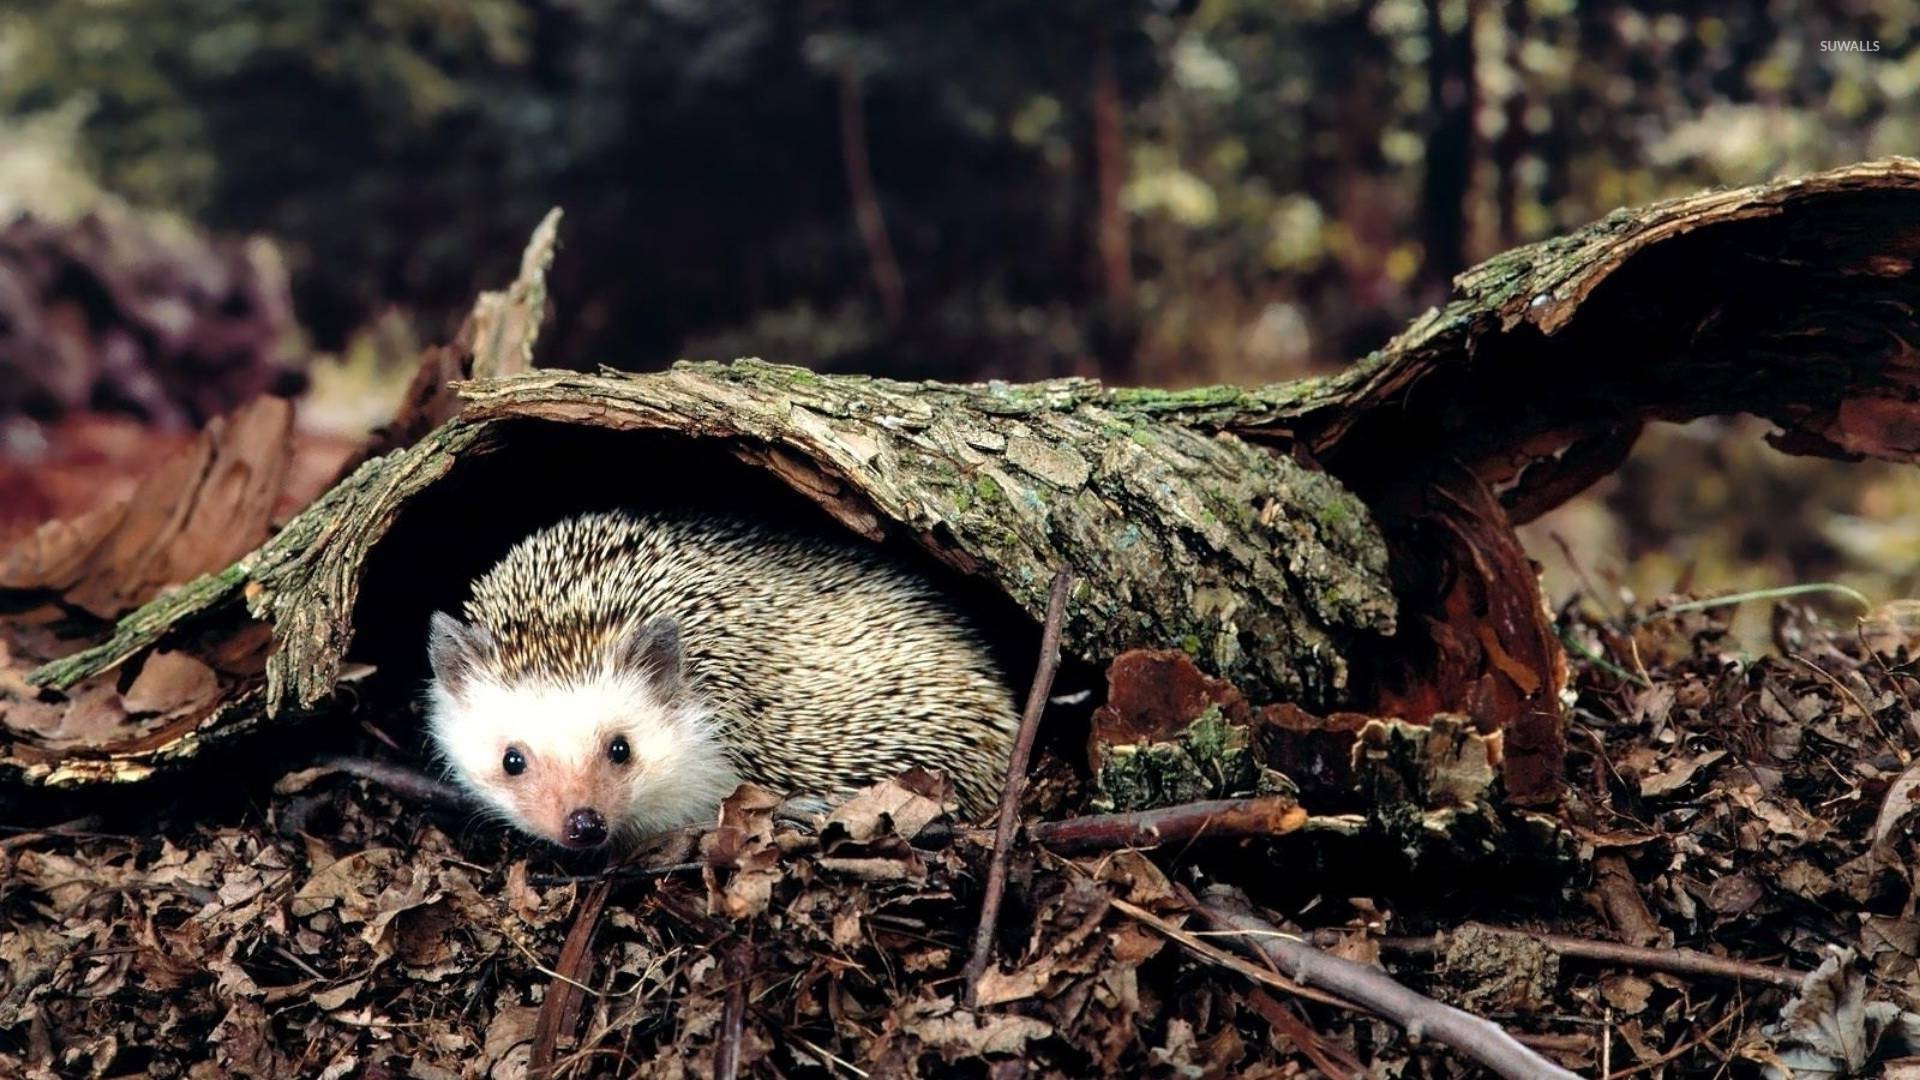 Hedgehog wallpaper   Animal wallpapers   22252